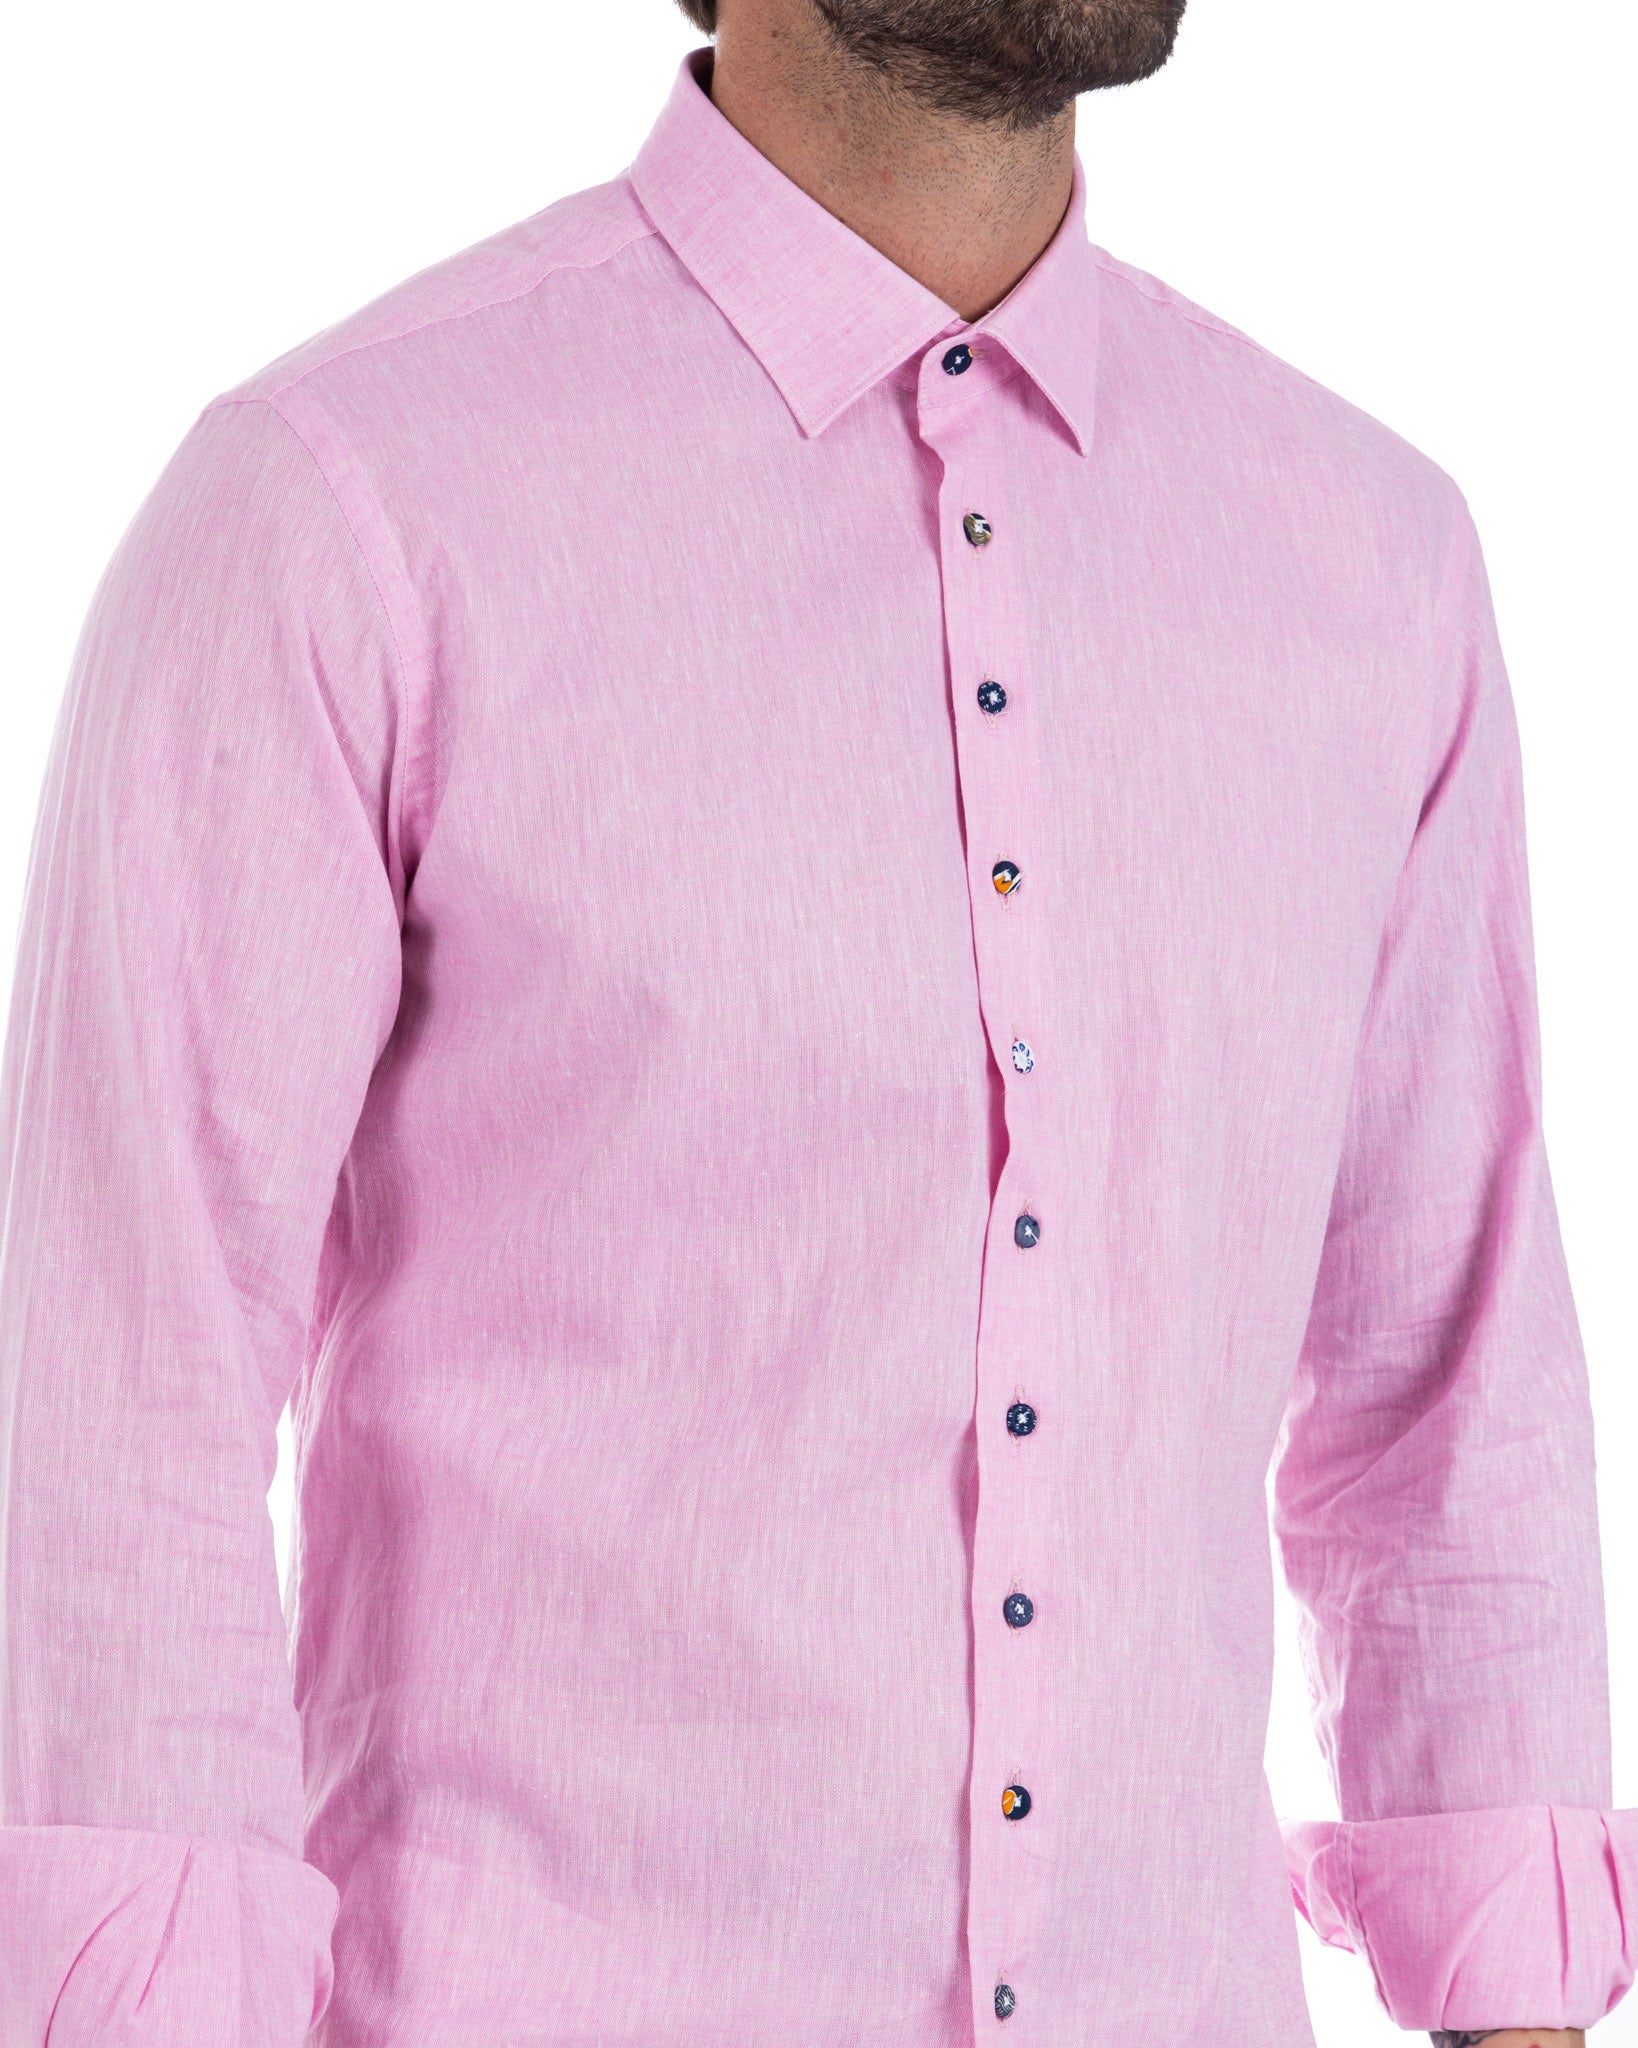 Praiano - chemise française en lin rose